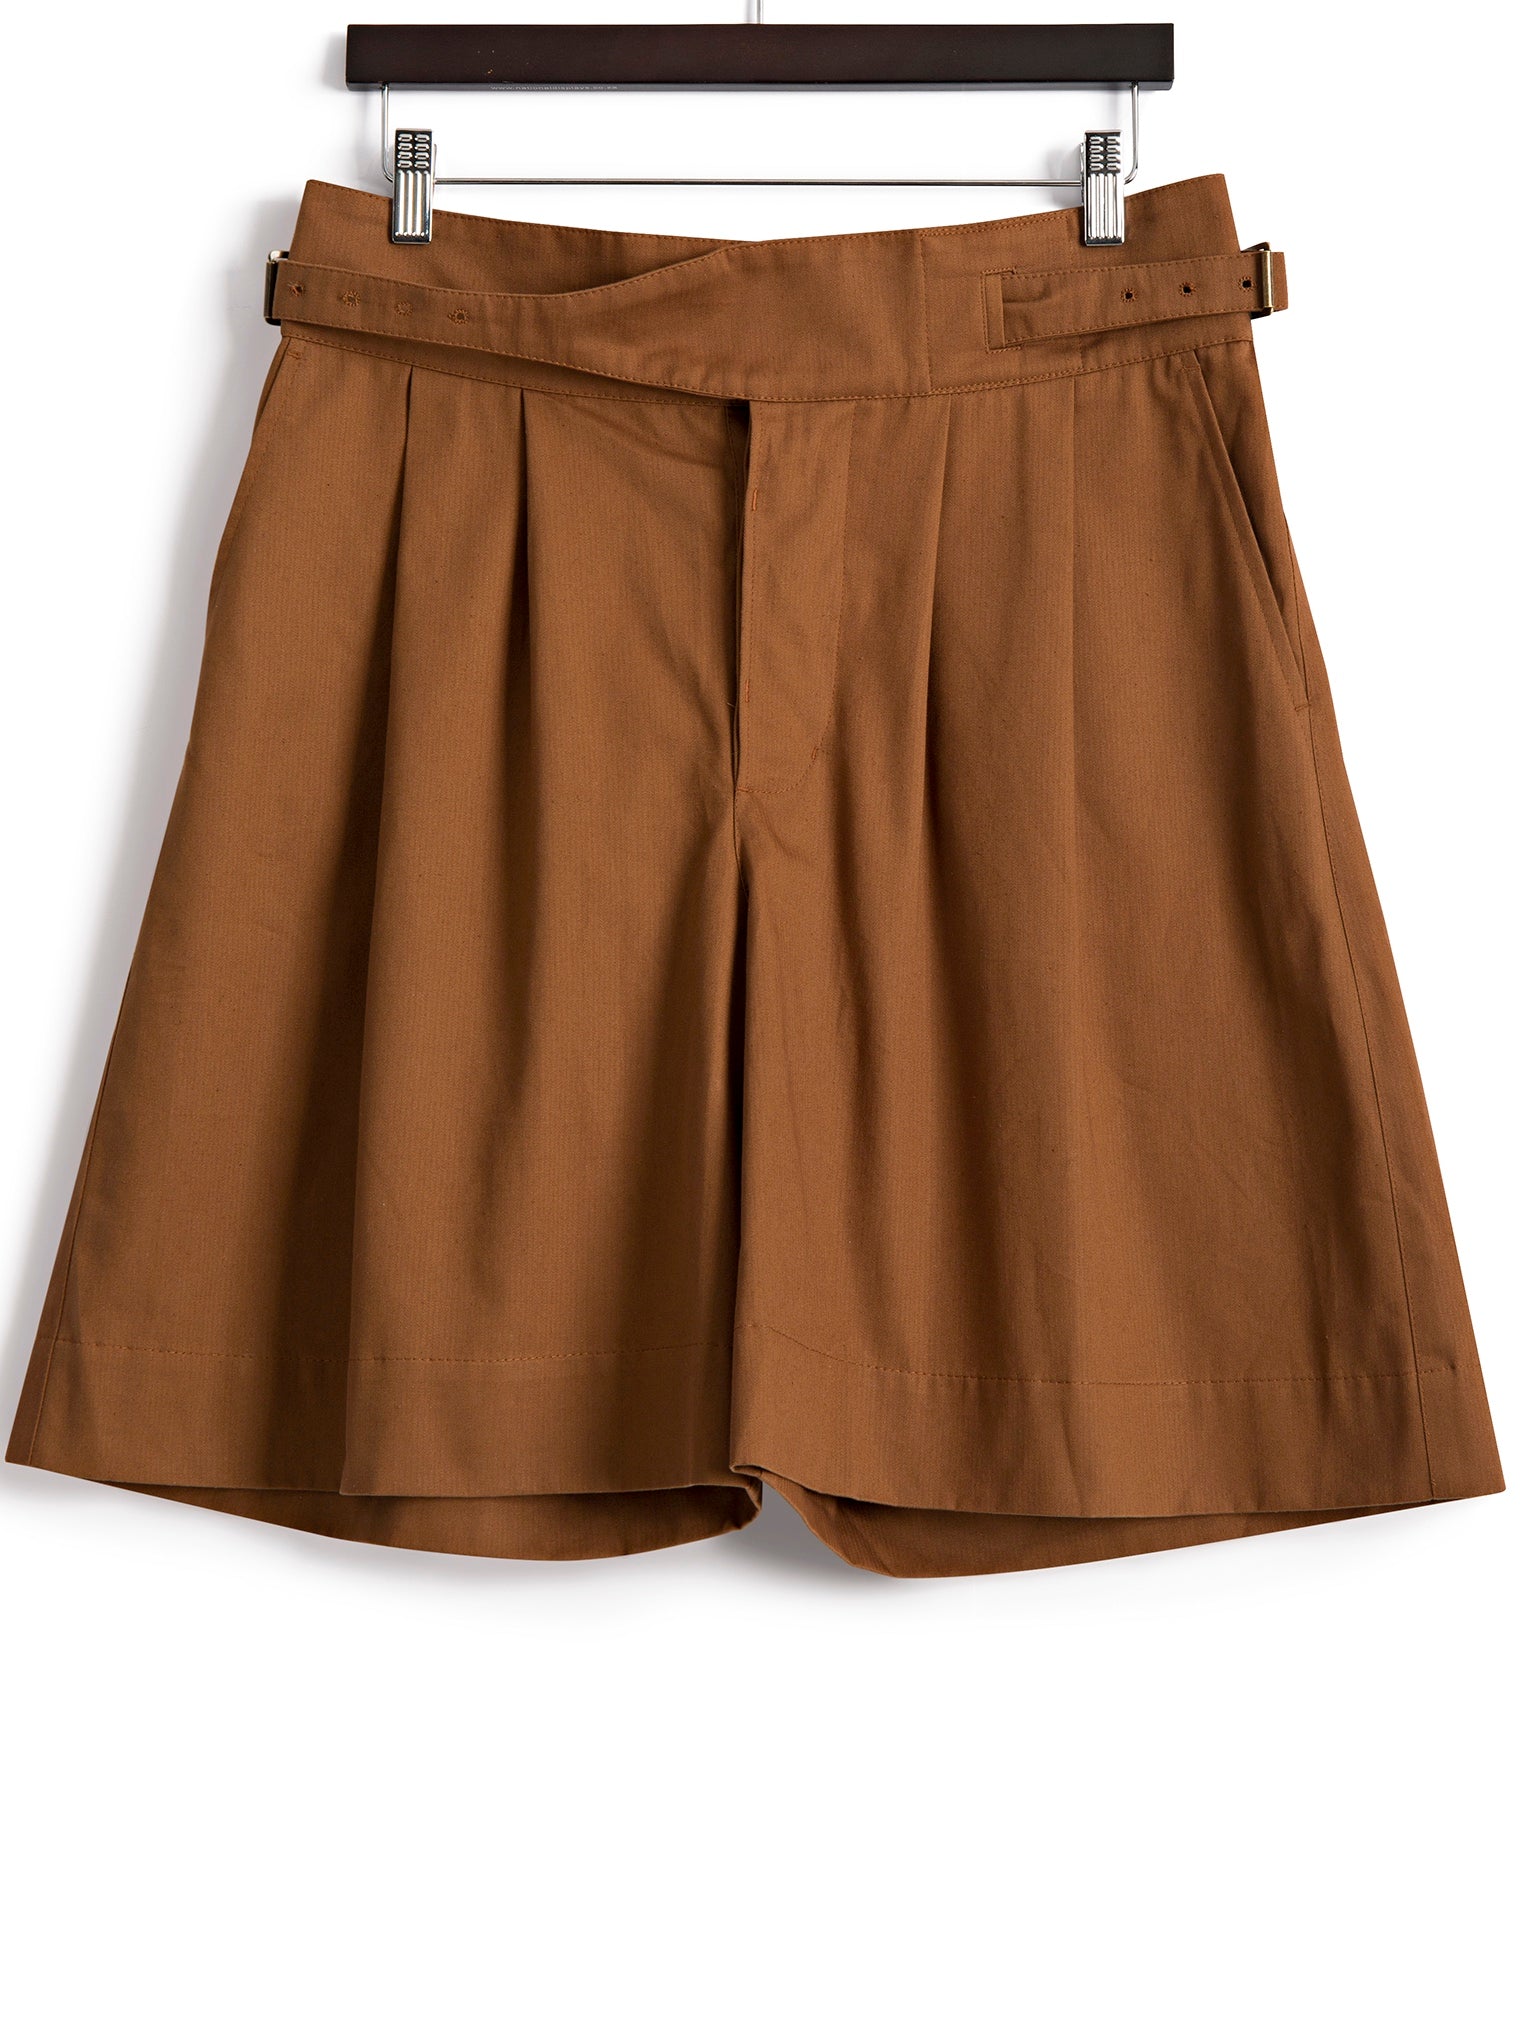 Safari Trousers  Safari Shorts  The Safari Store